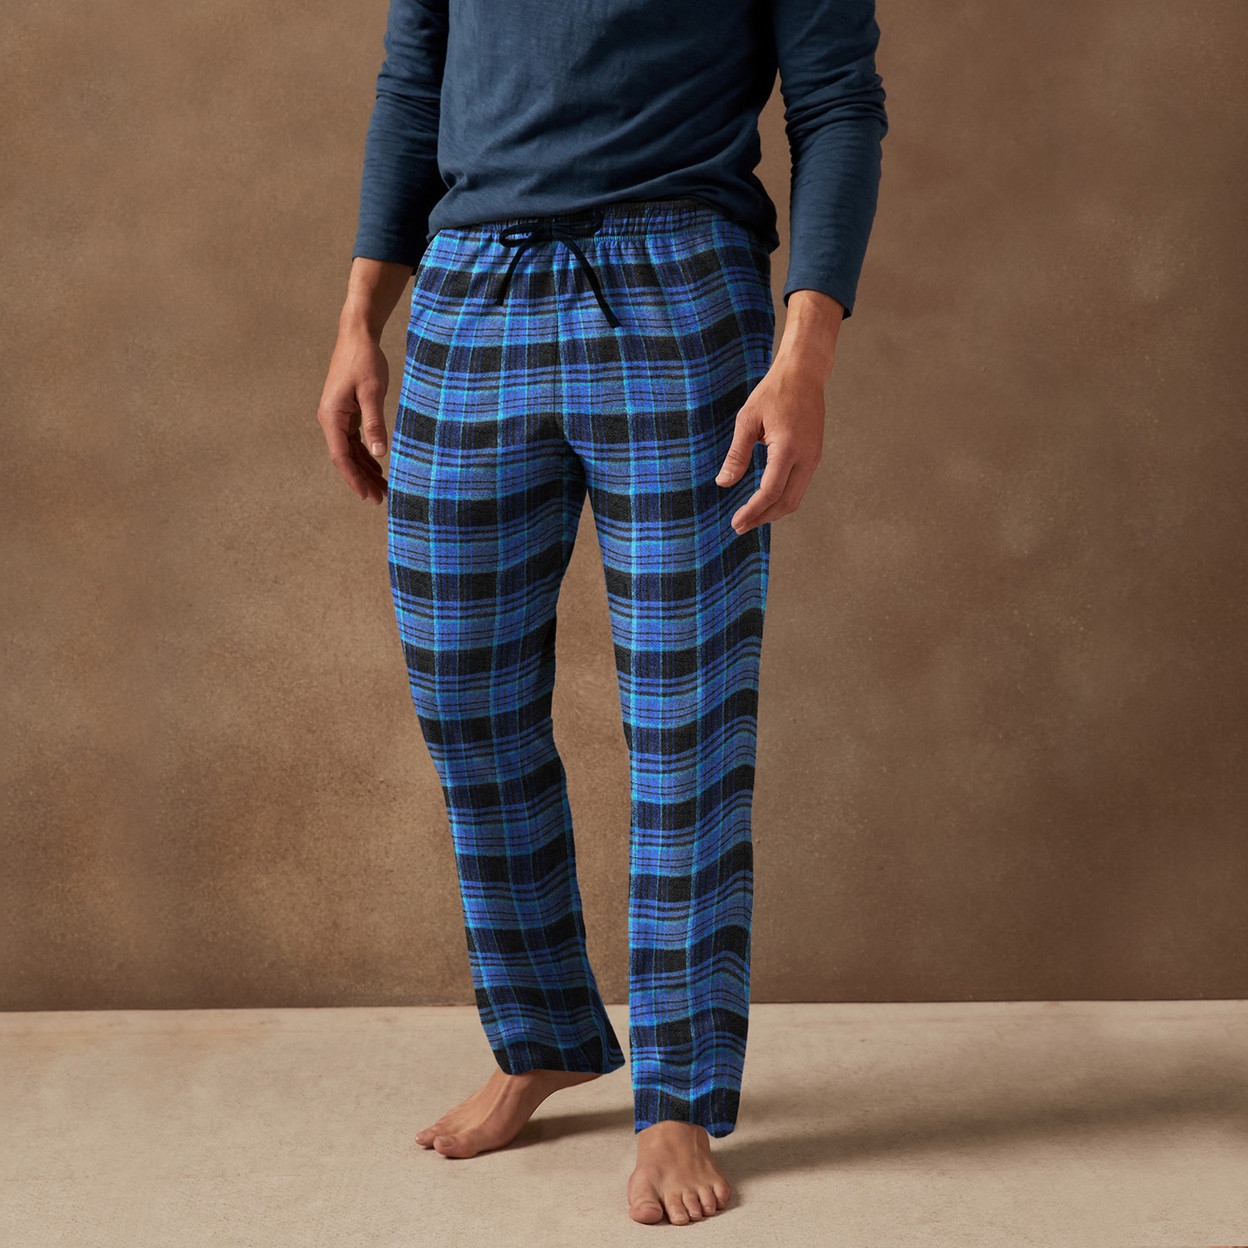 Men's Ultra-Soft Cozy Flannel Fleece Plaid Pajama Sleep Bottom Lounge Pants - Blue, Small